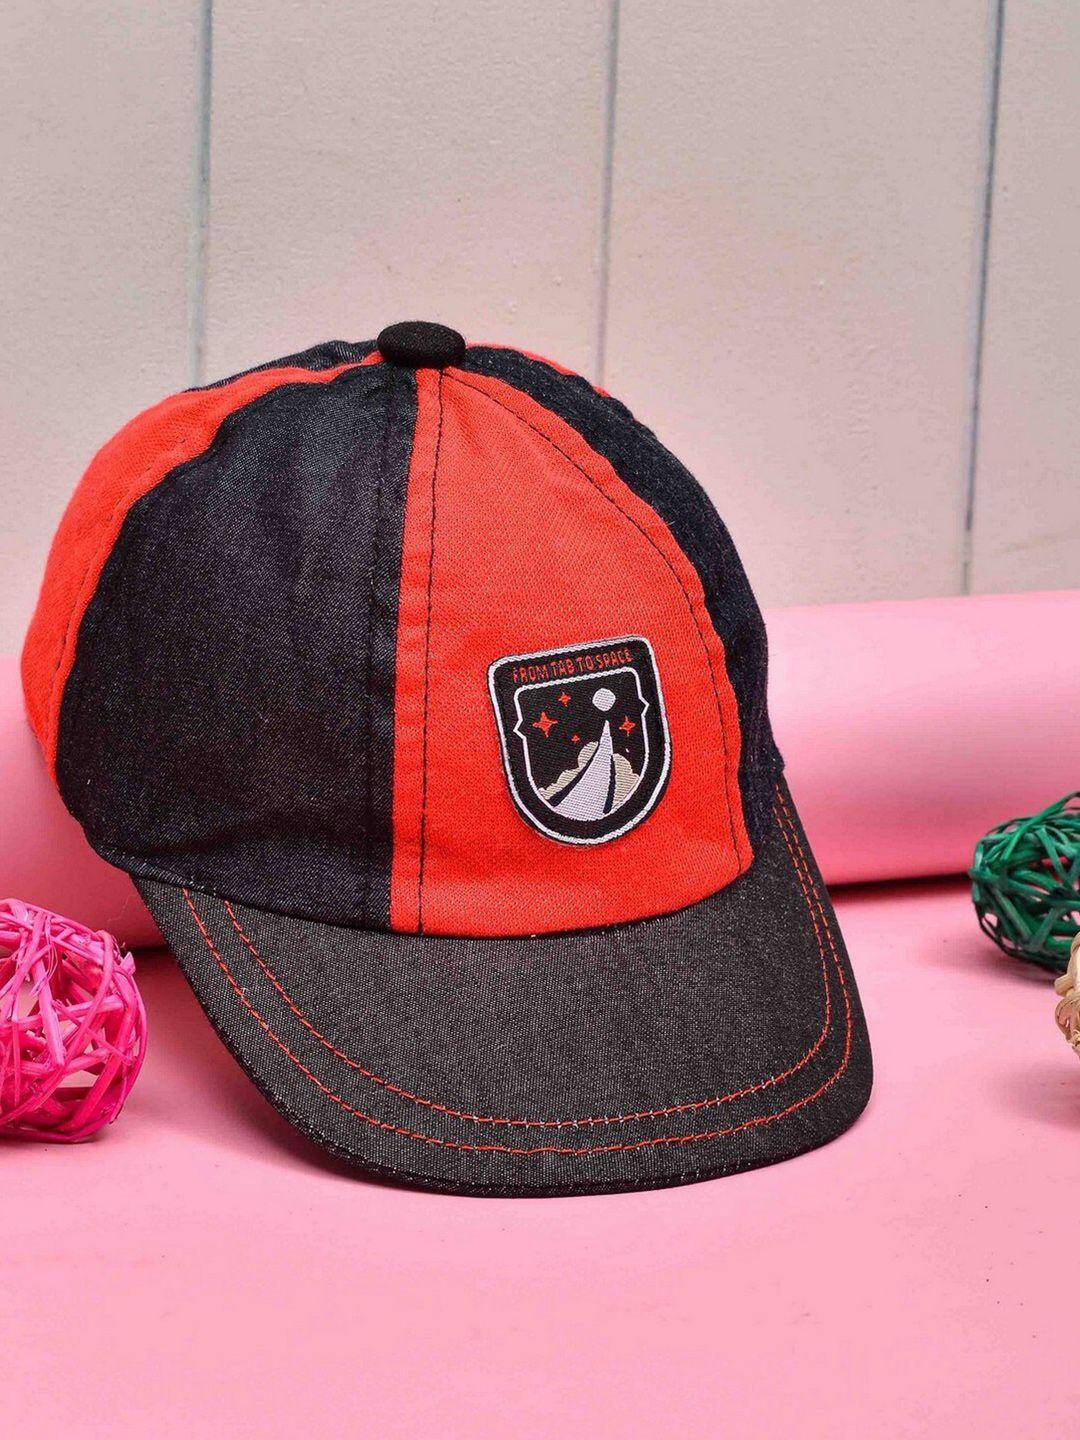 poplins unisex kids black & red colourblocked baseball cap